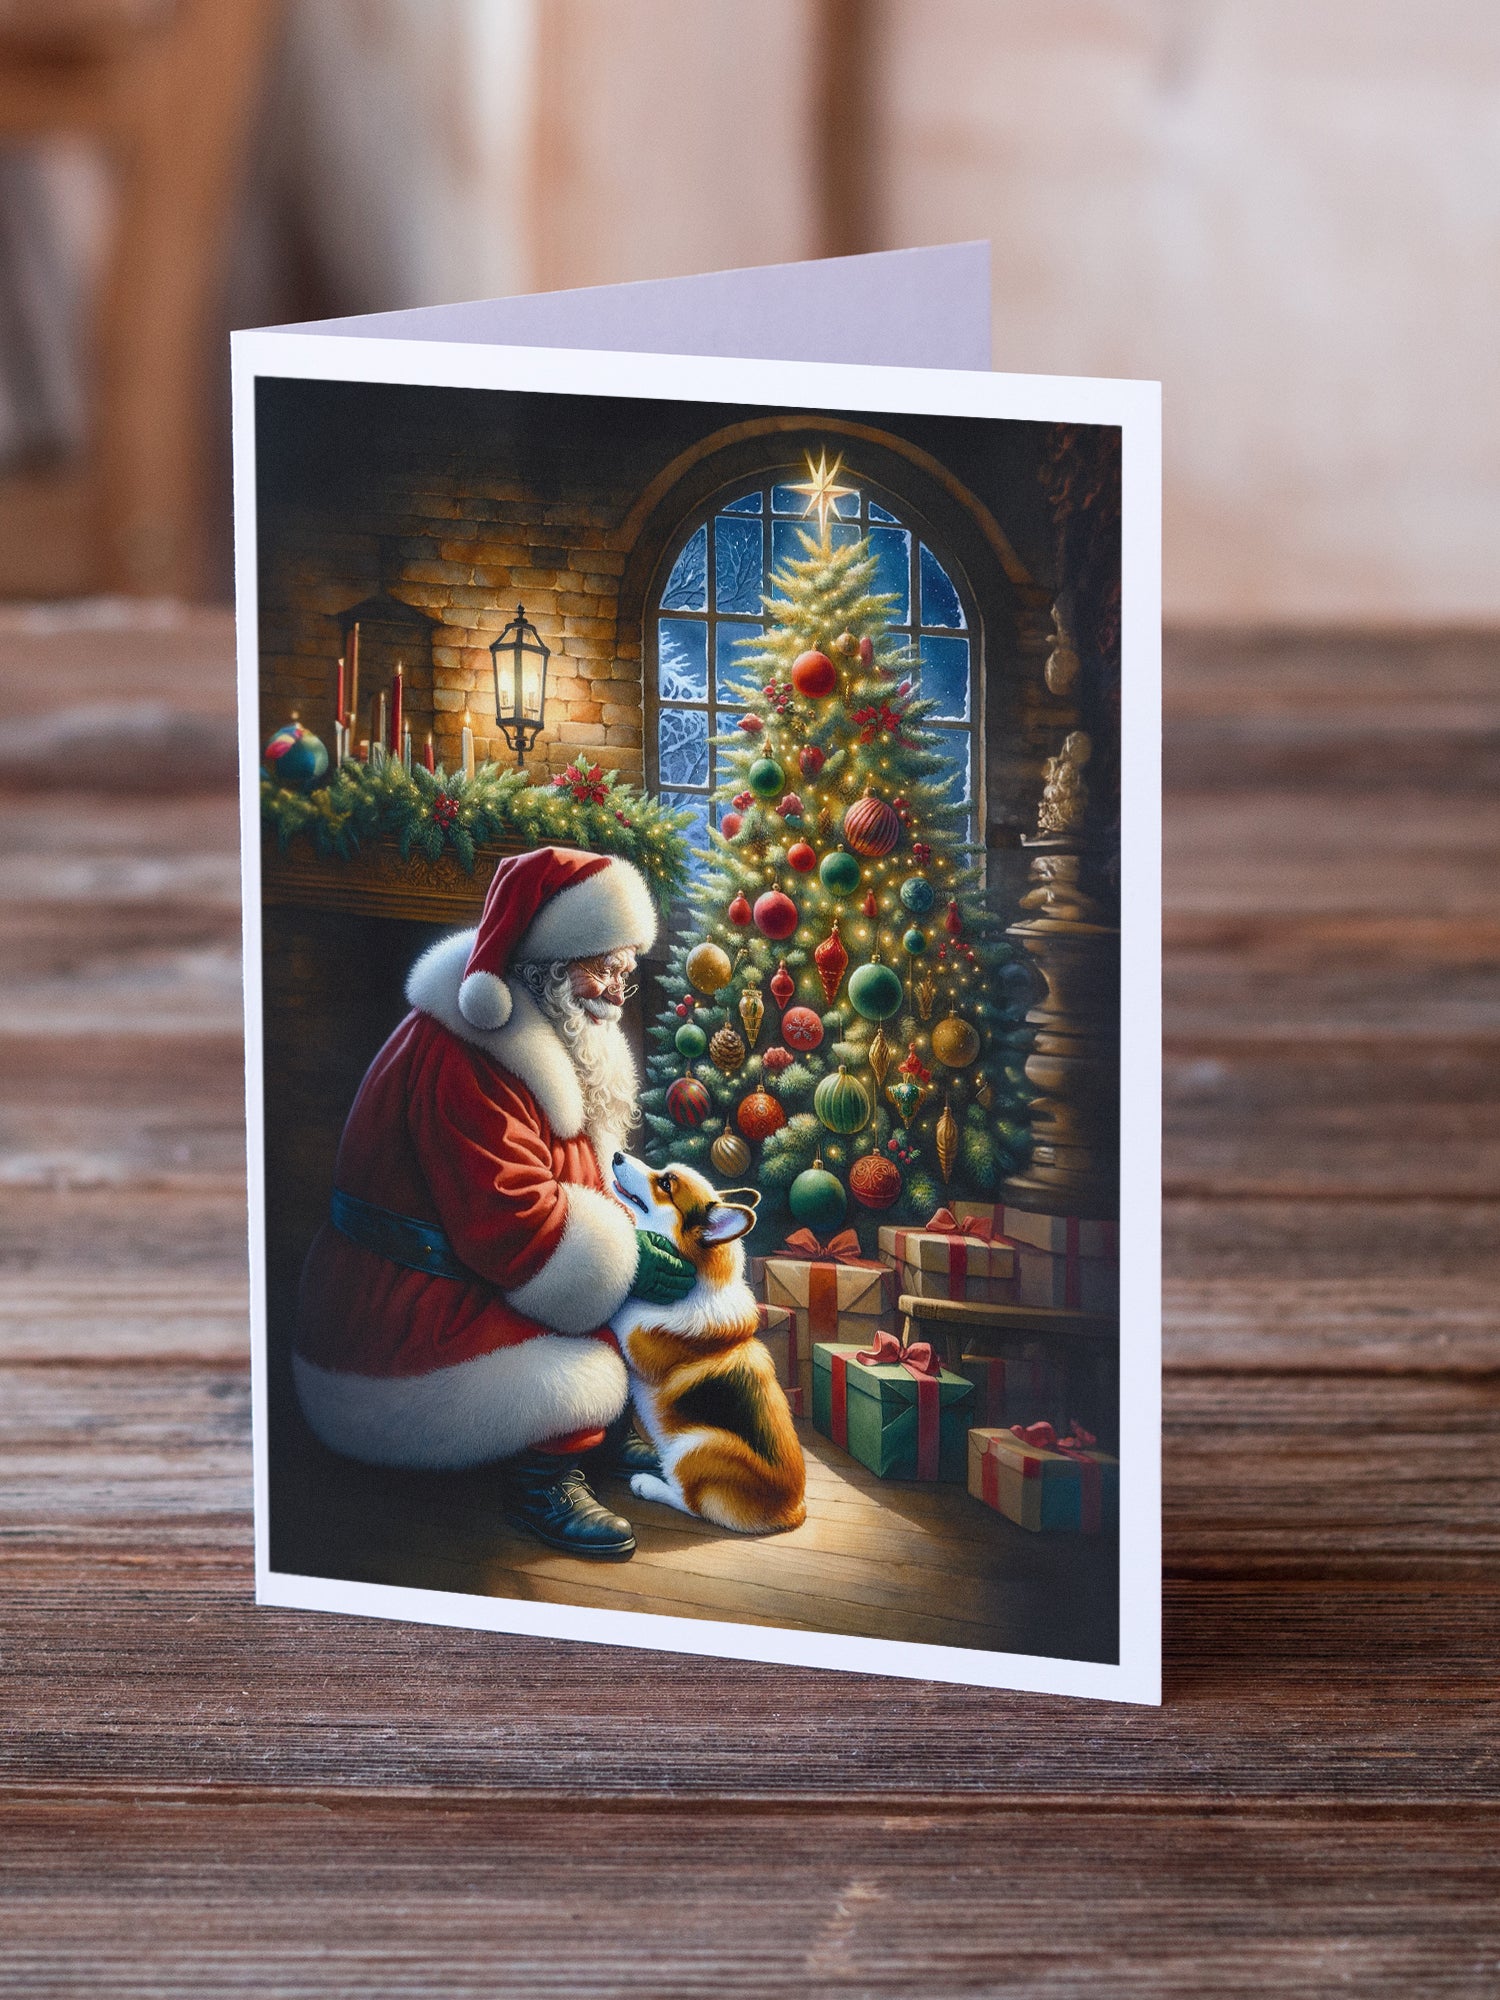 Buy this Corgi and Santa Claus Greeting Cards Pack of 8